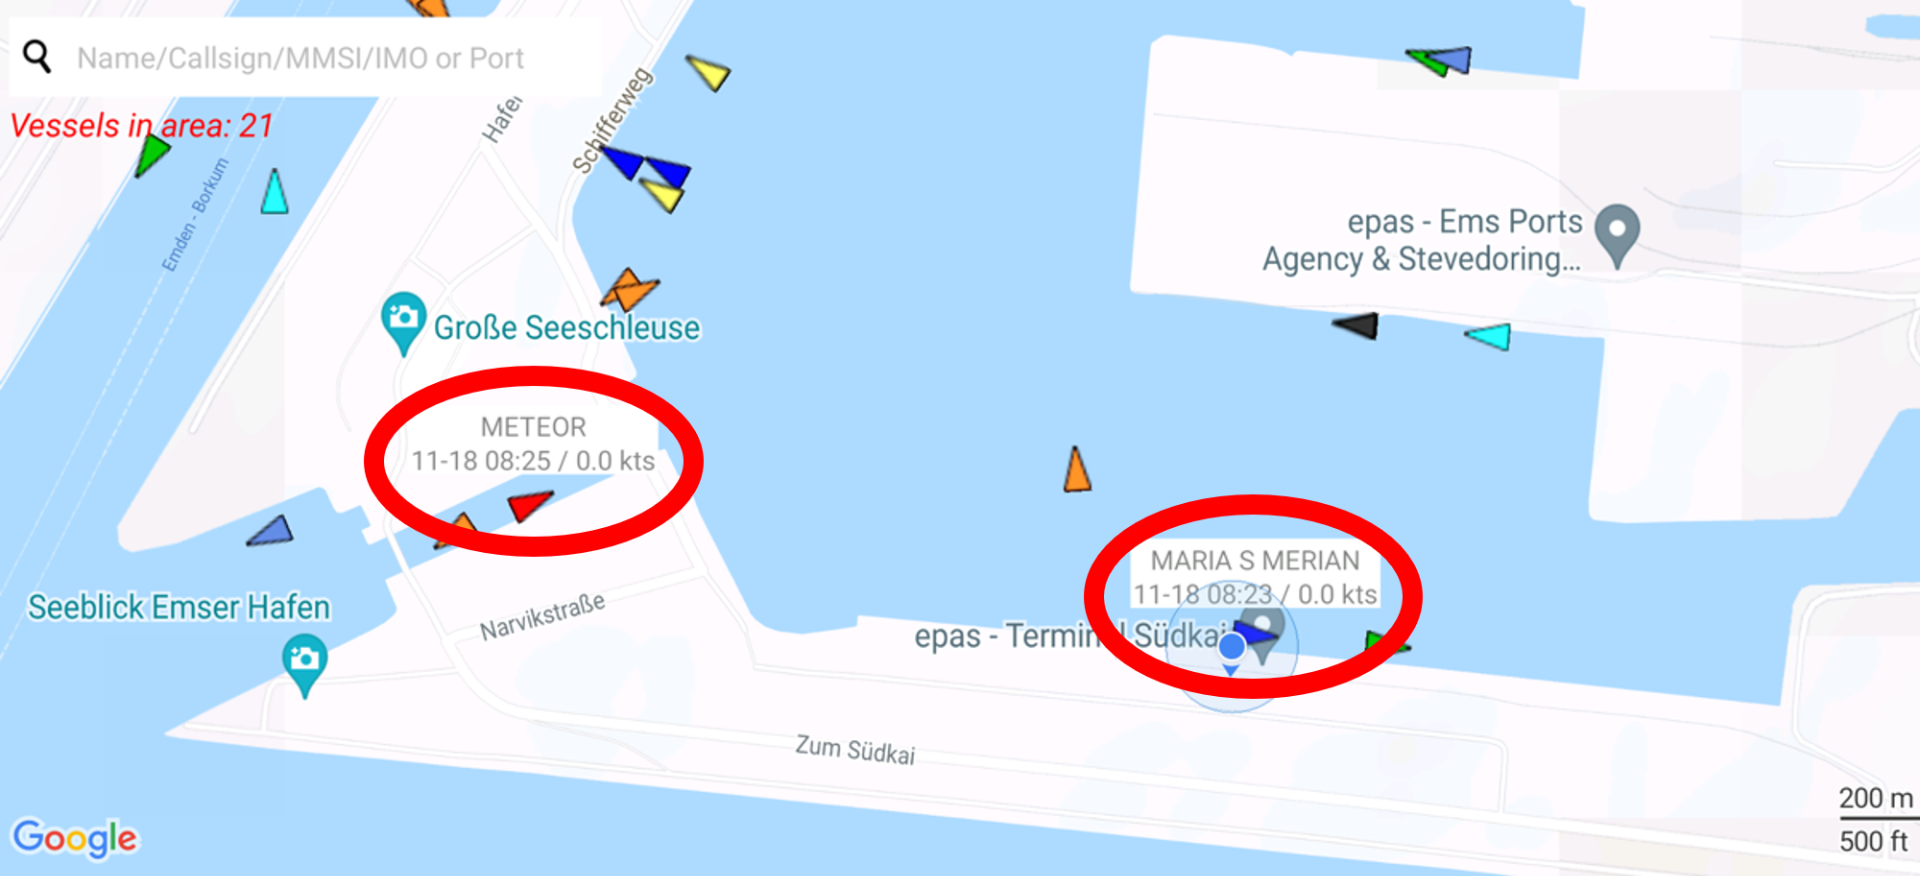 Screenshot of the Shipfinder app showing both RVs Meteor and Maria S Merian entering/leaving Emden harbour